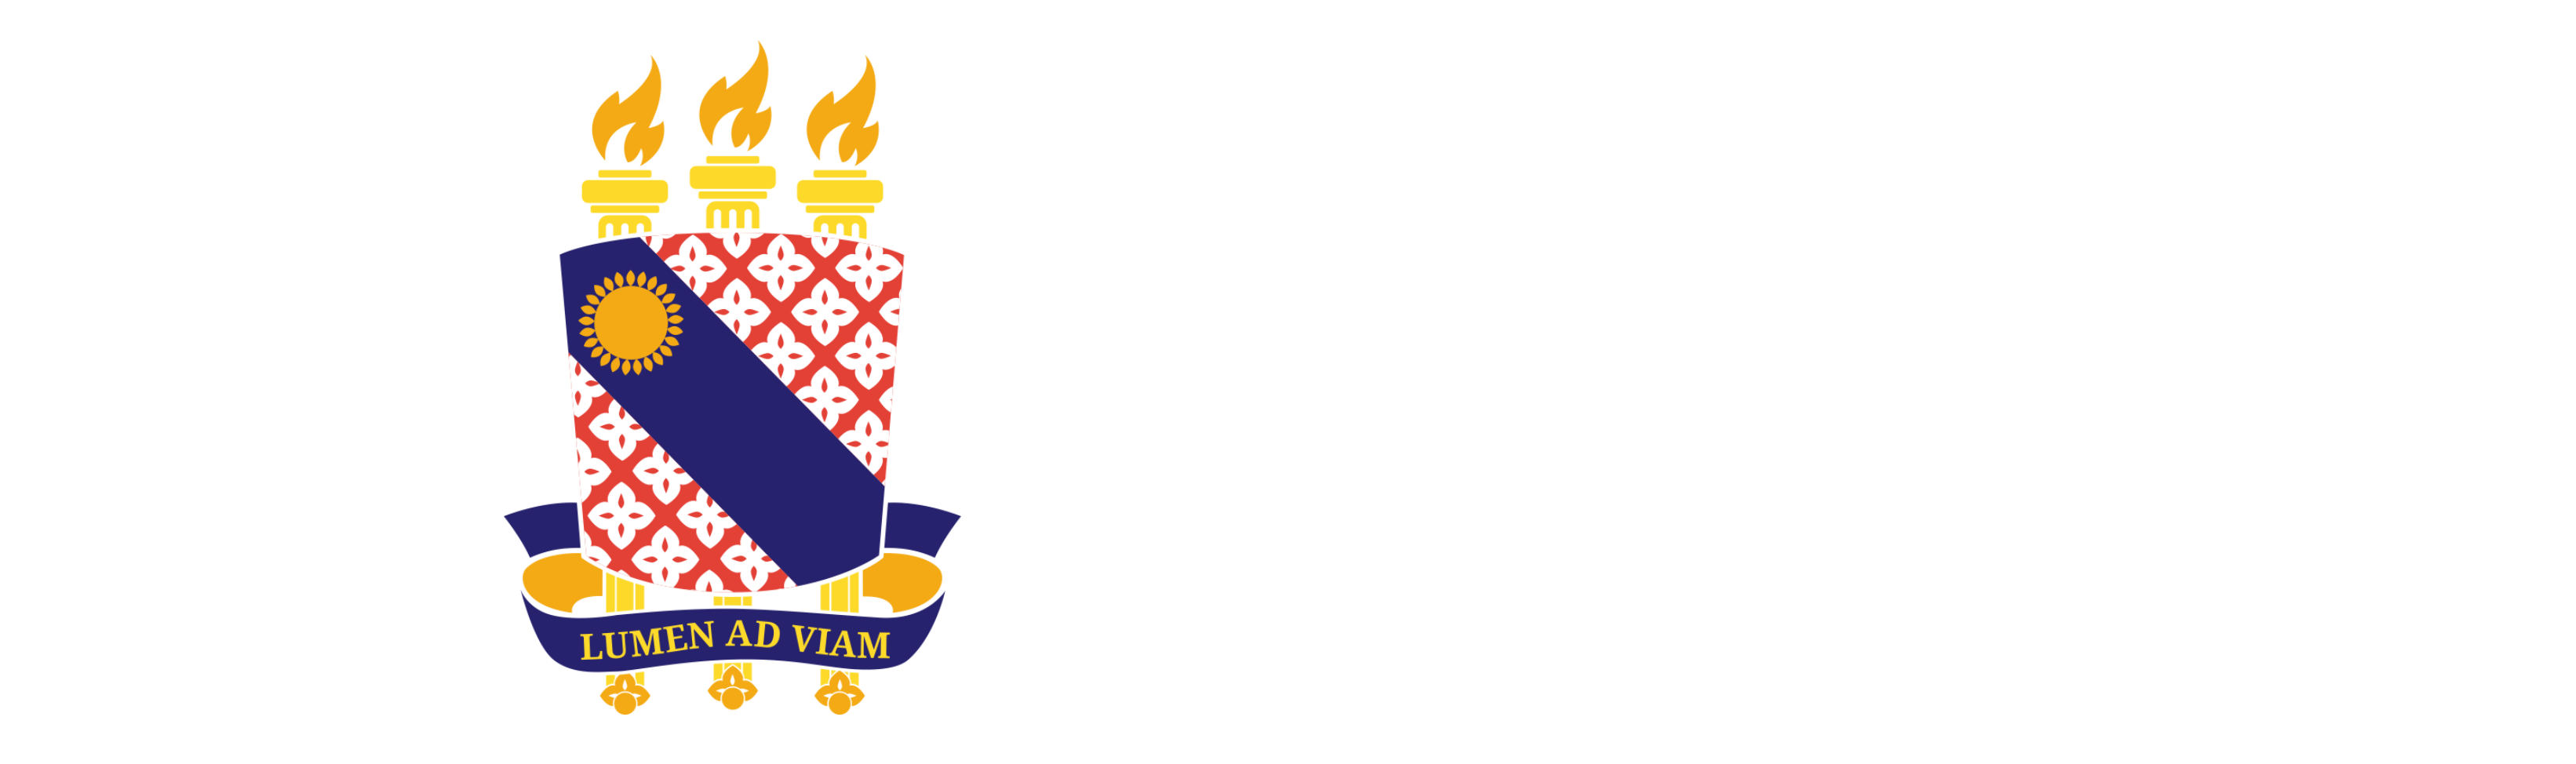 PPGCF